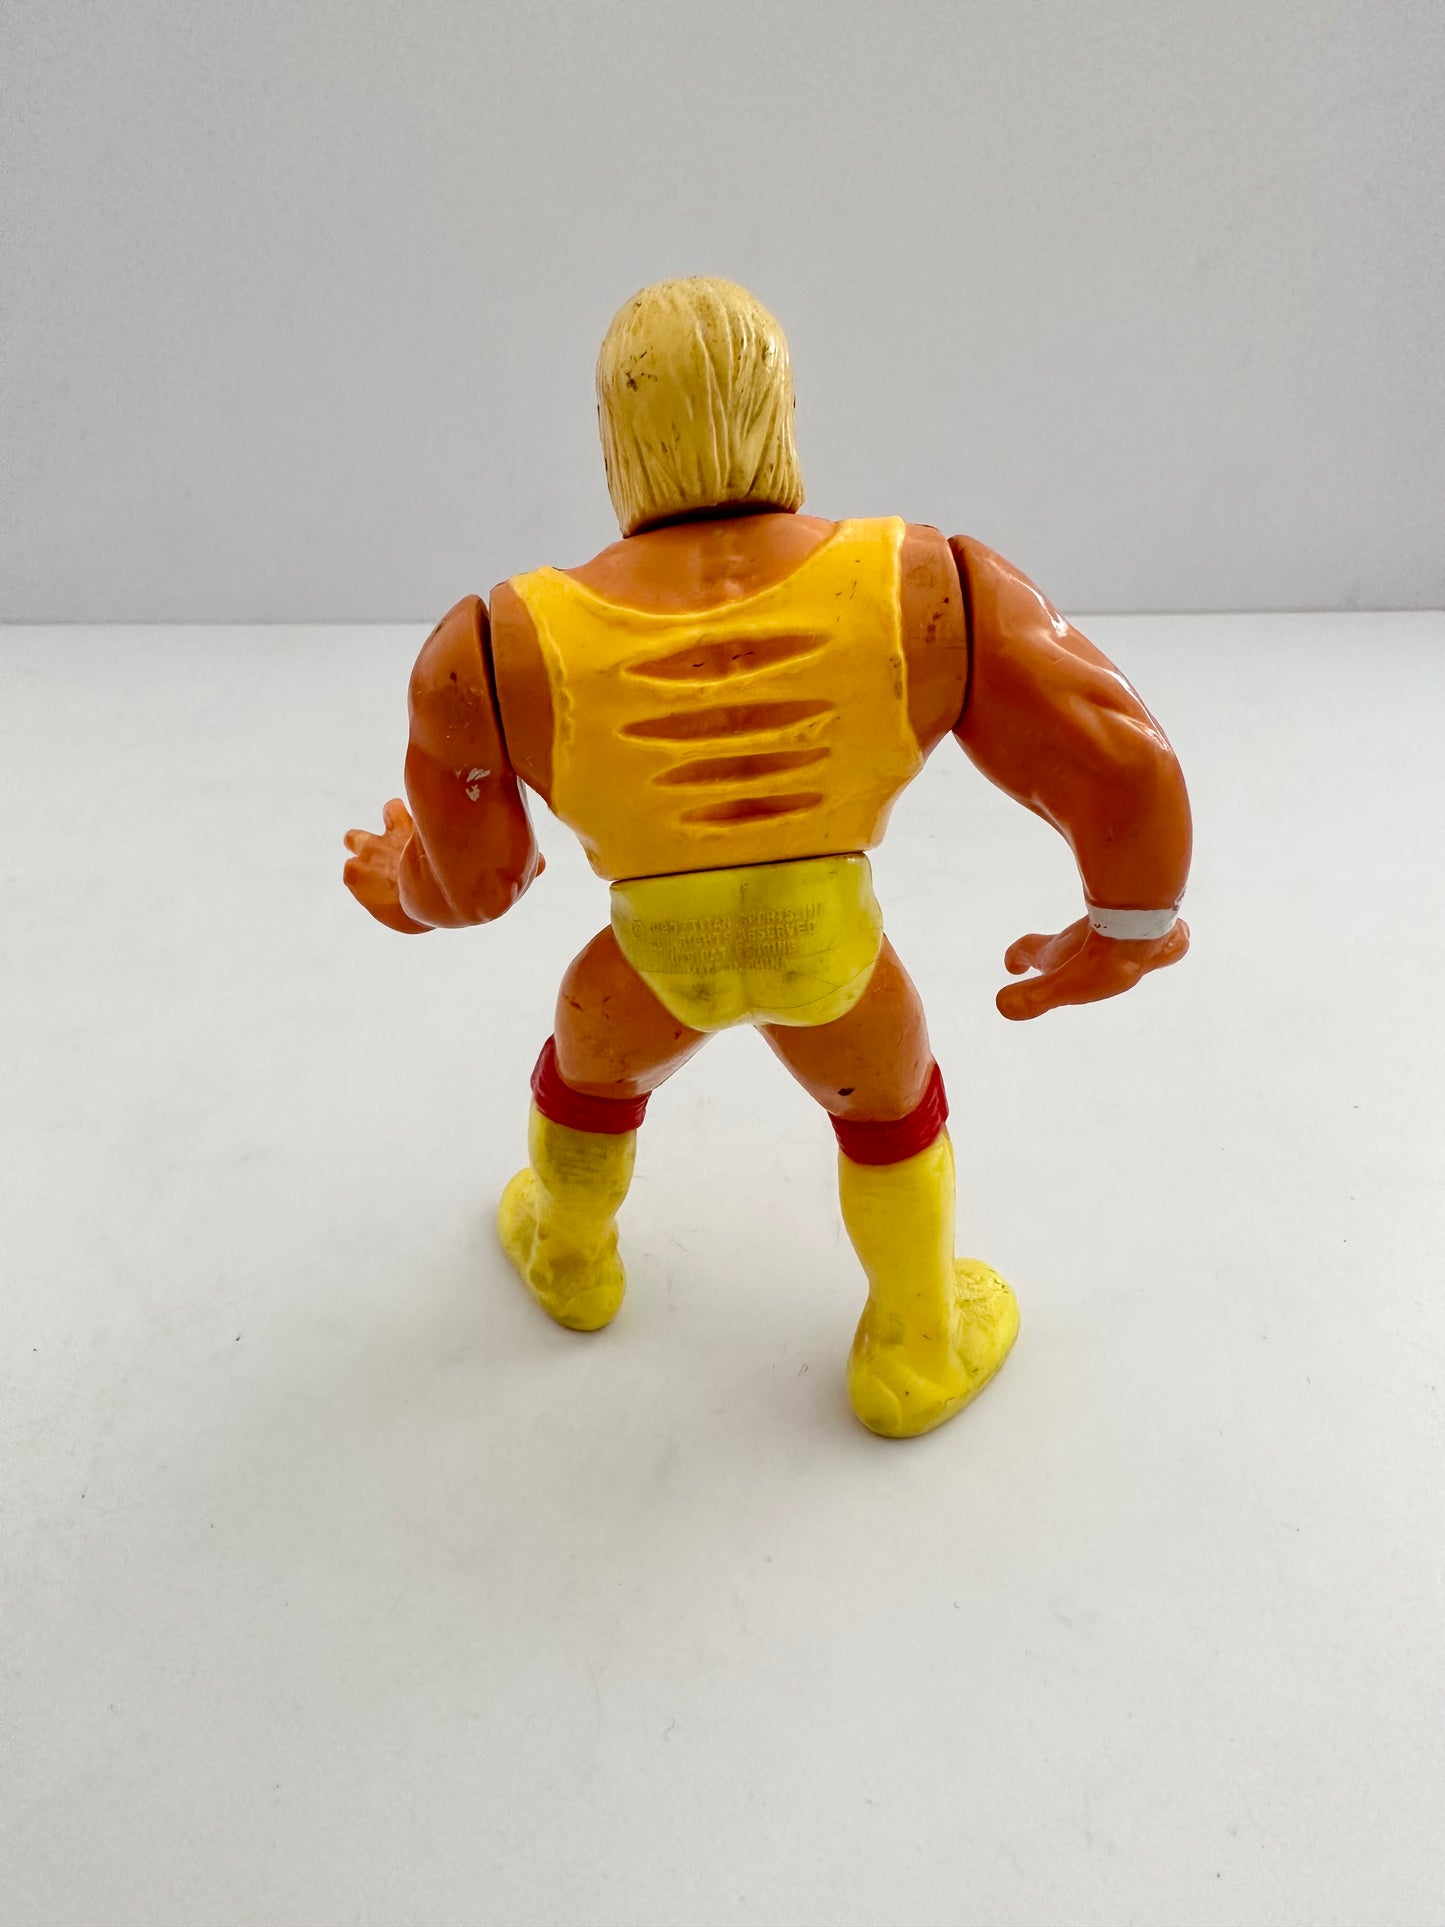 WWF Hasbro Superstar Hulk Hogan